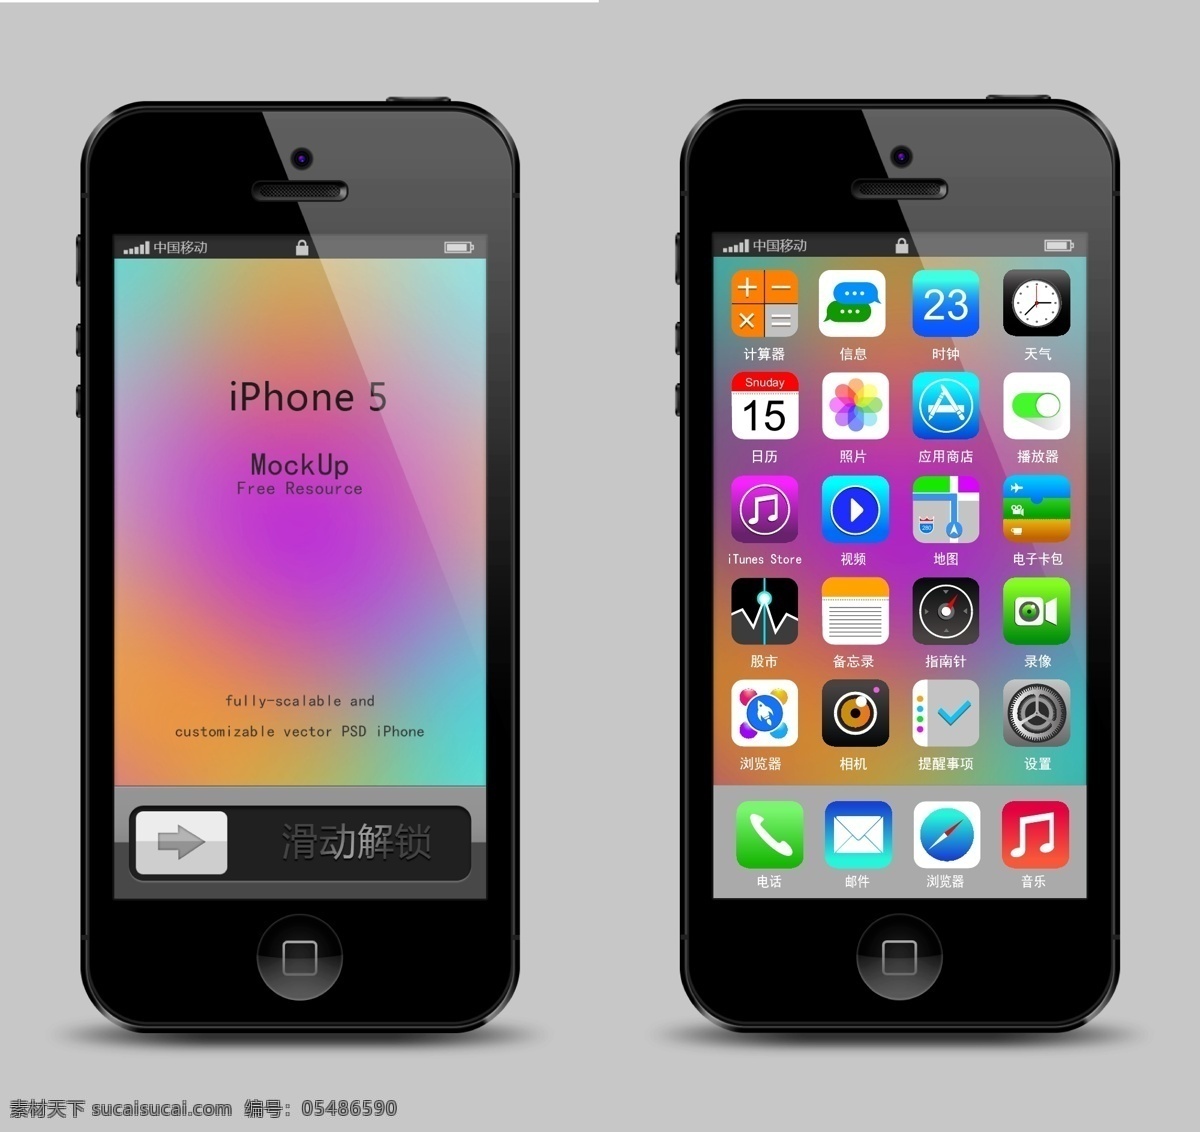 iphone5 界面 手机界面 ui图标 手机主题 解锁界面 移动界面设计 矢量 灰色